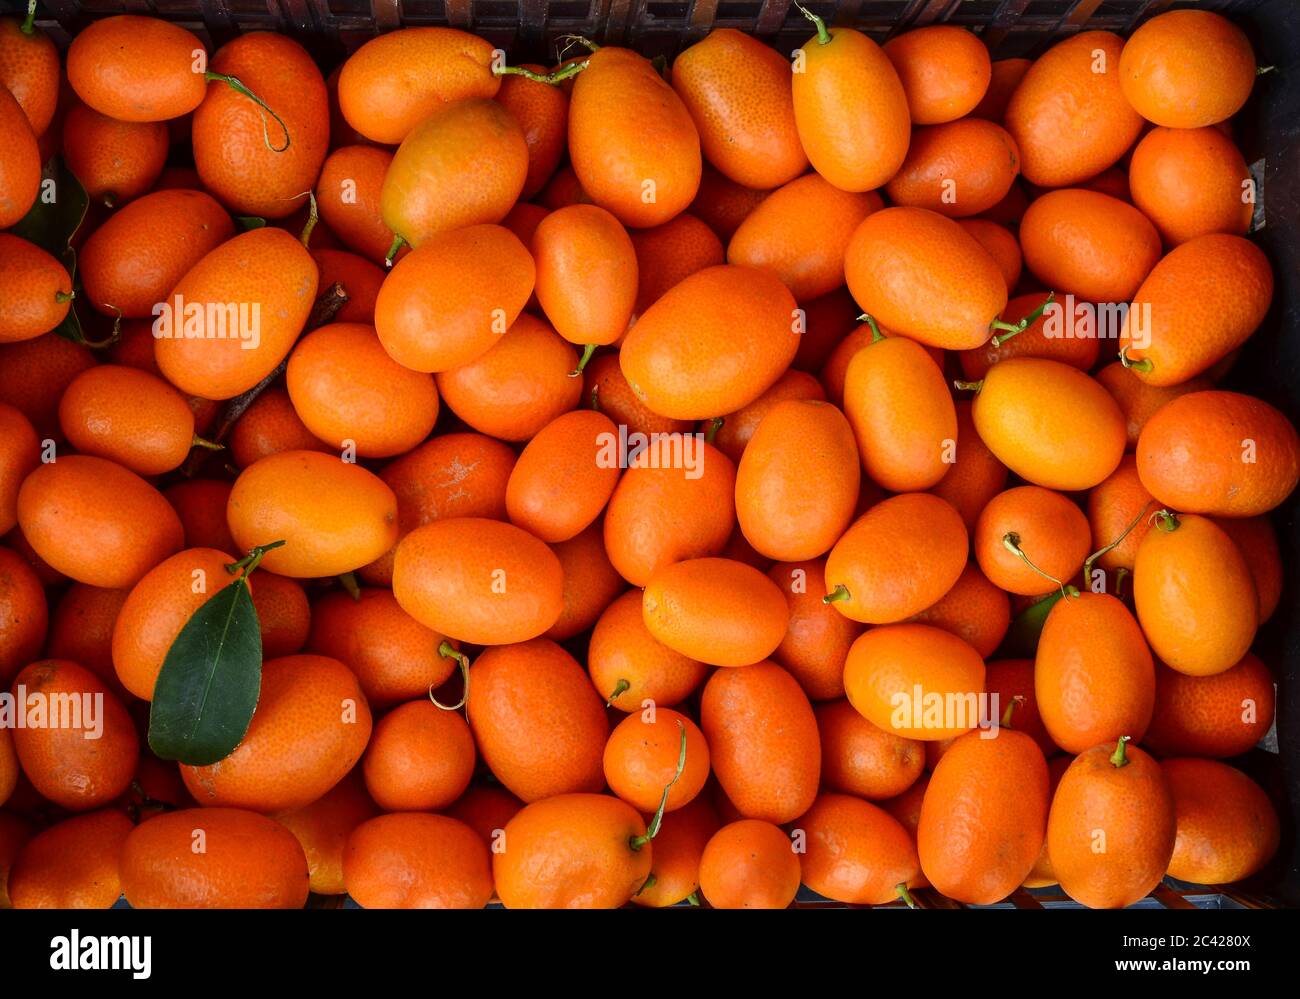 Very aromatic Oval Kumquat or Nagami Kumquat, (Citrus japonica 'Margarita' or Fortunella margarita), southern fruit rich in vitamins A, B and C Stock Photo